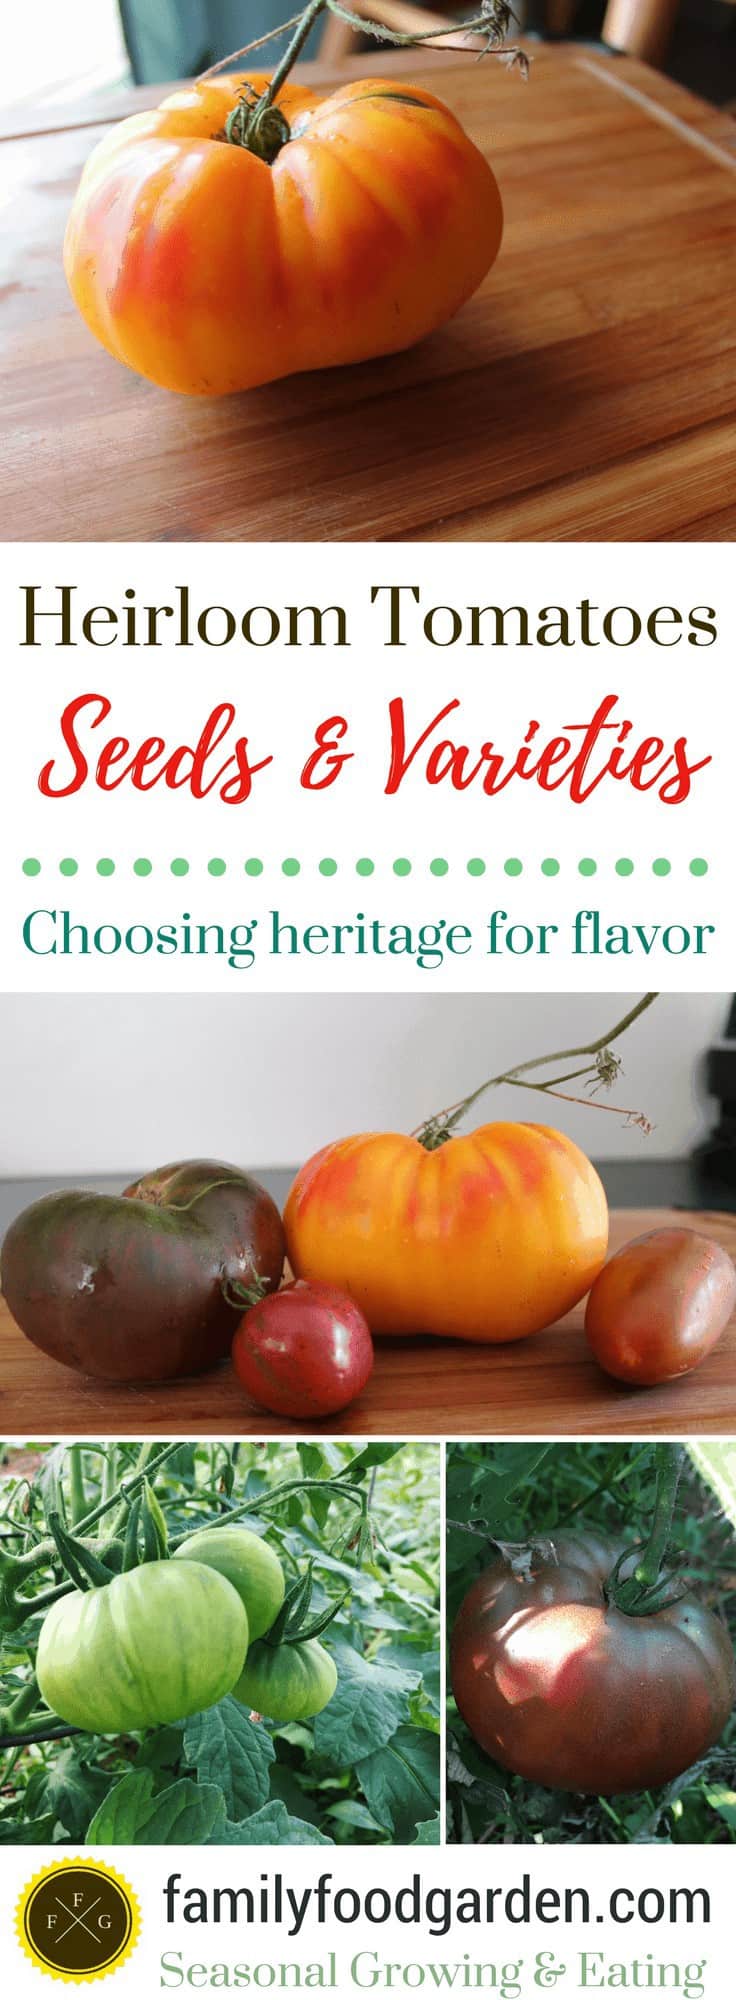 Heirloom Tomatoes: Seeds & Varieties | Family Food Garden